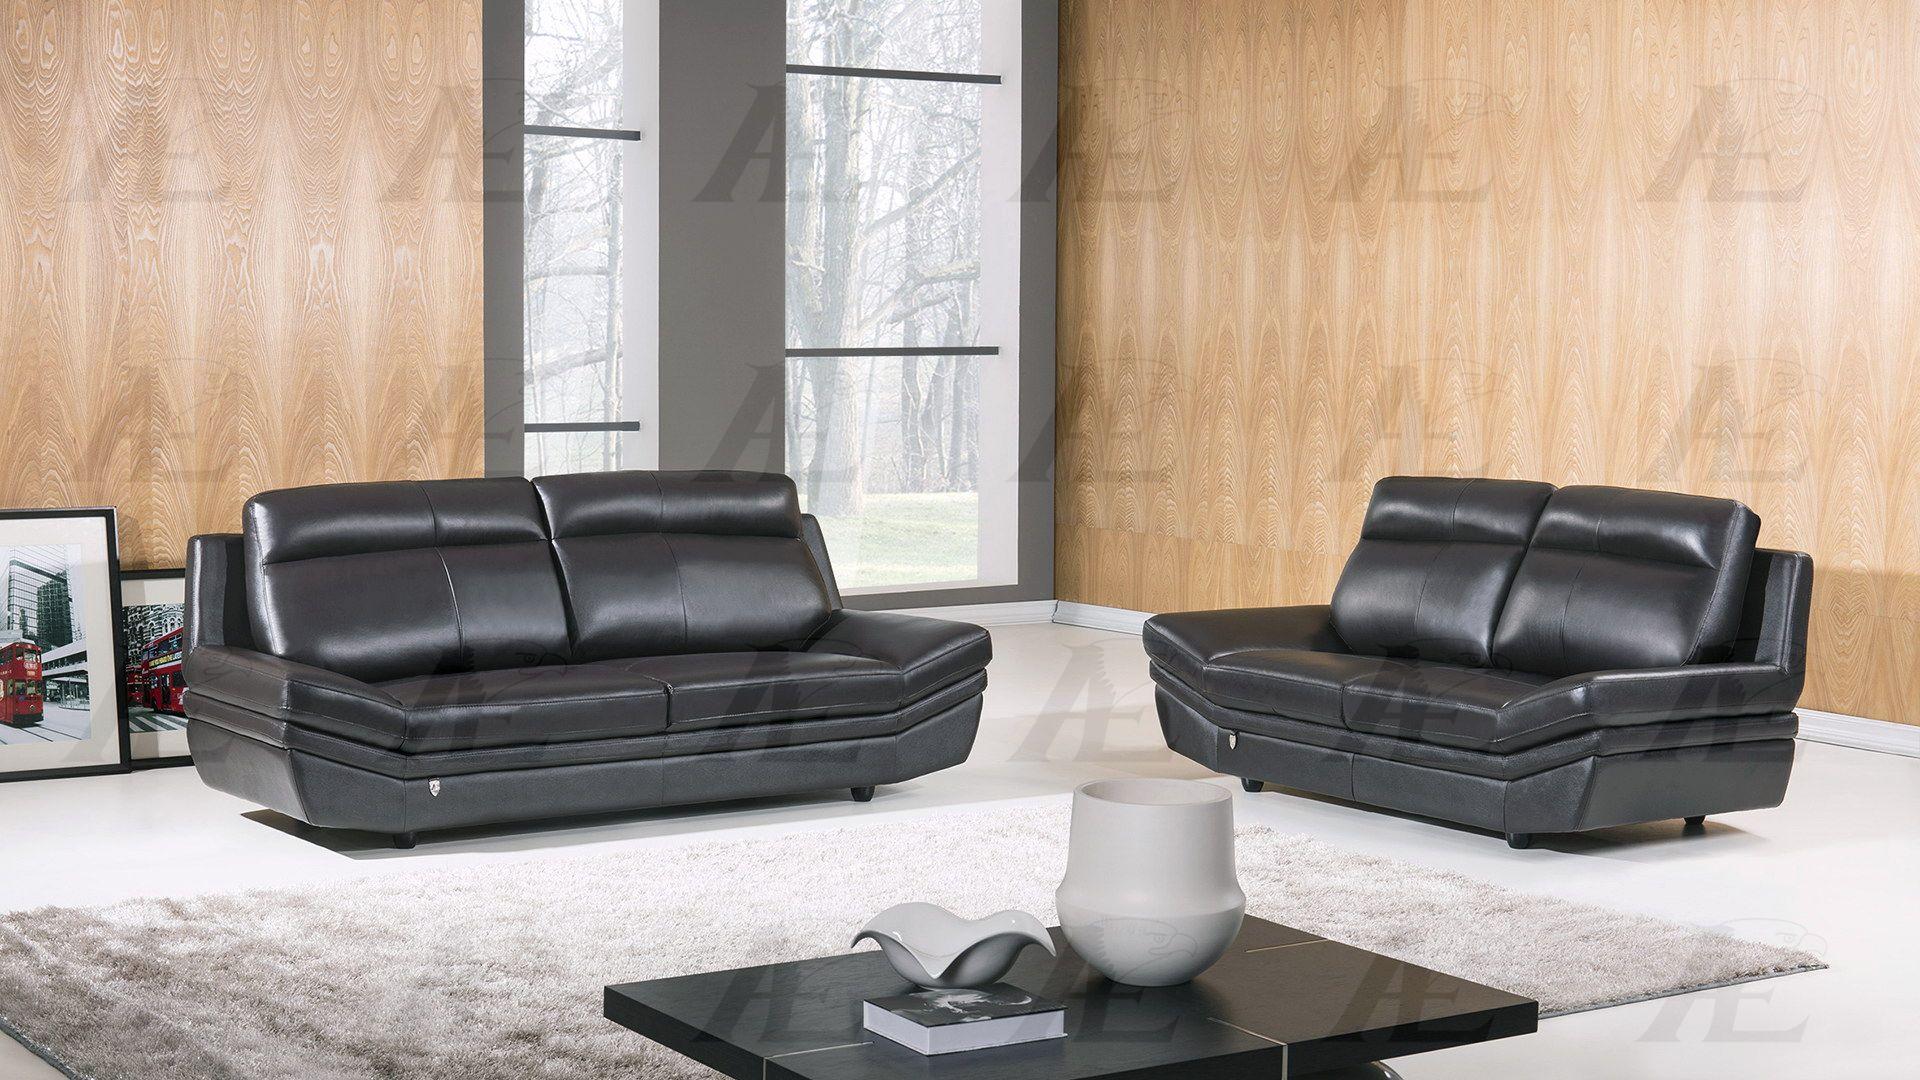 

    
American Eagle EK075 Black Italian Leather Living Room Sofa Set 2pcs in Contemporary Style
